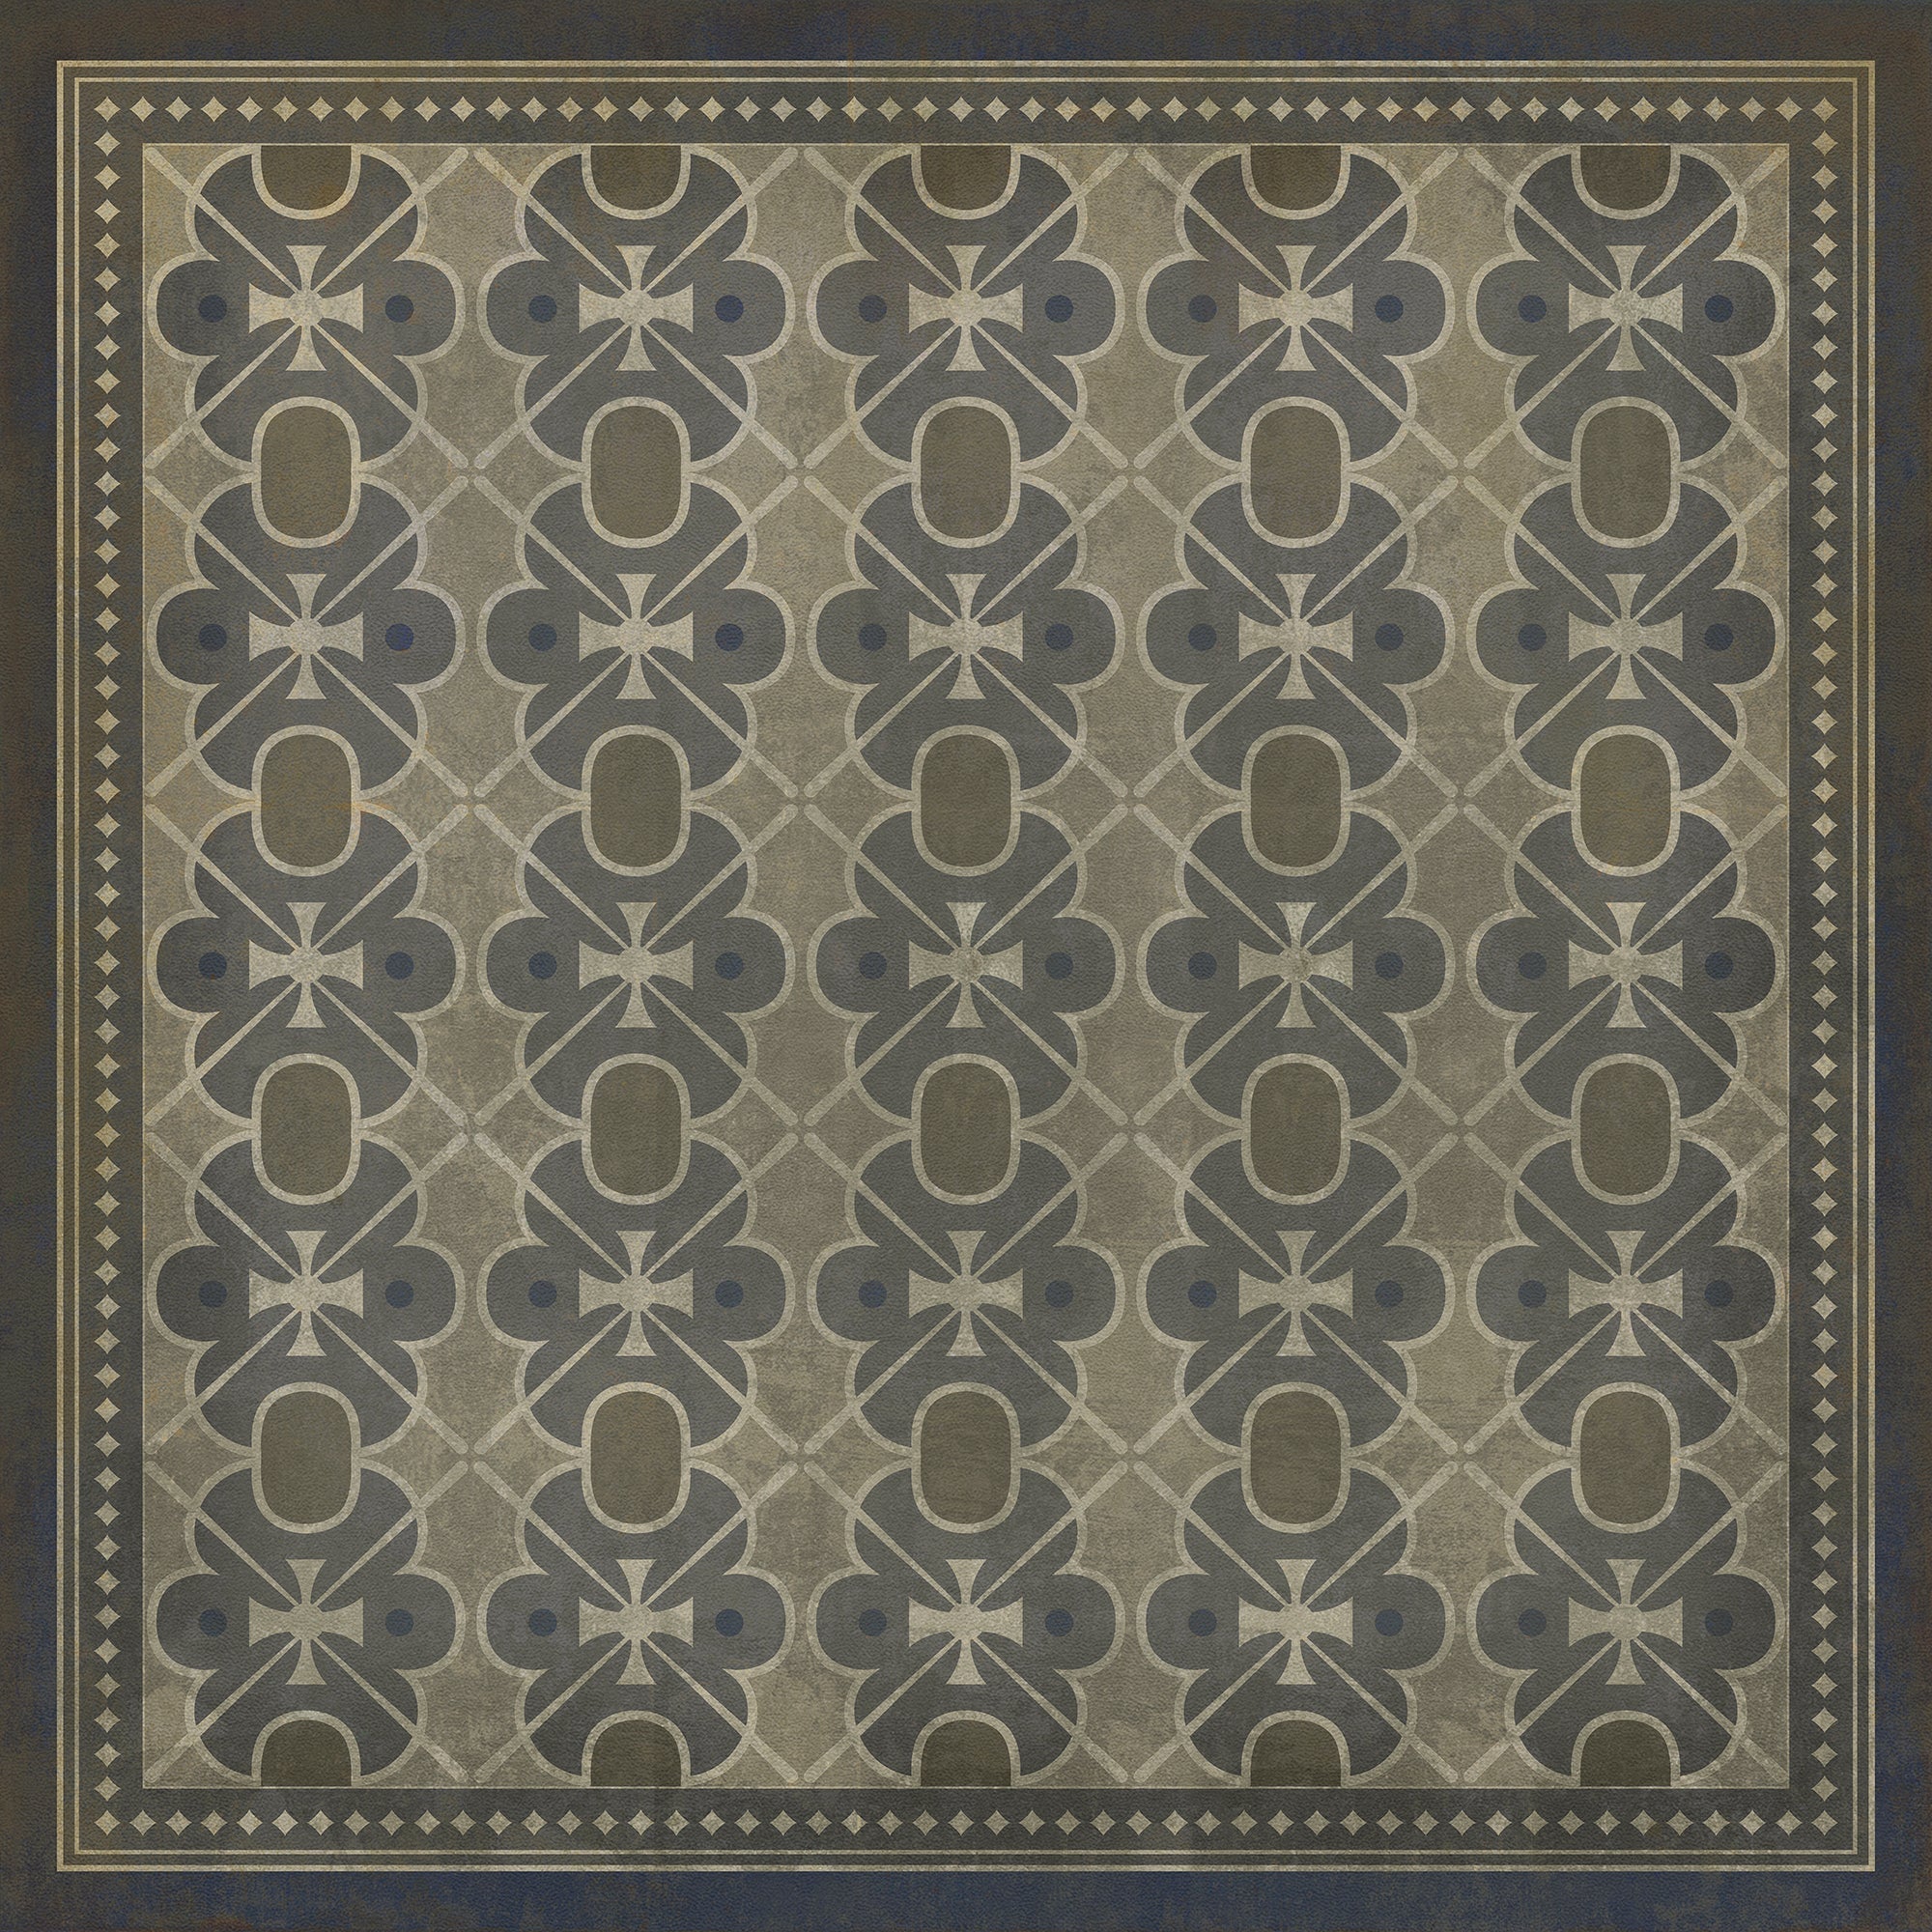 Pattern 05 London Fog Vinyl Floor Cloth